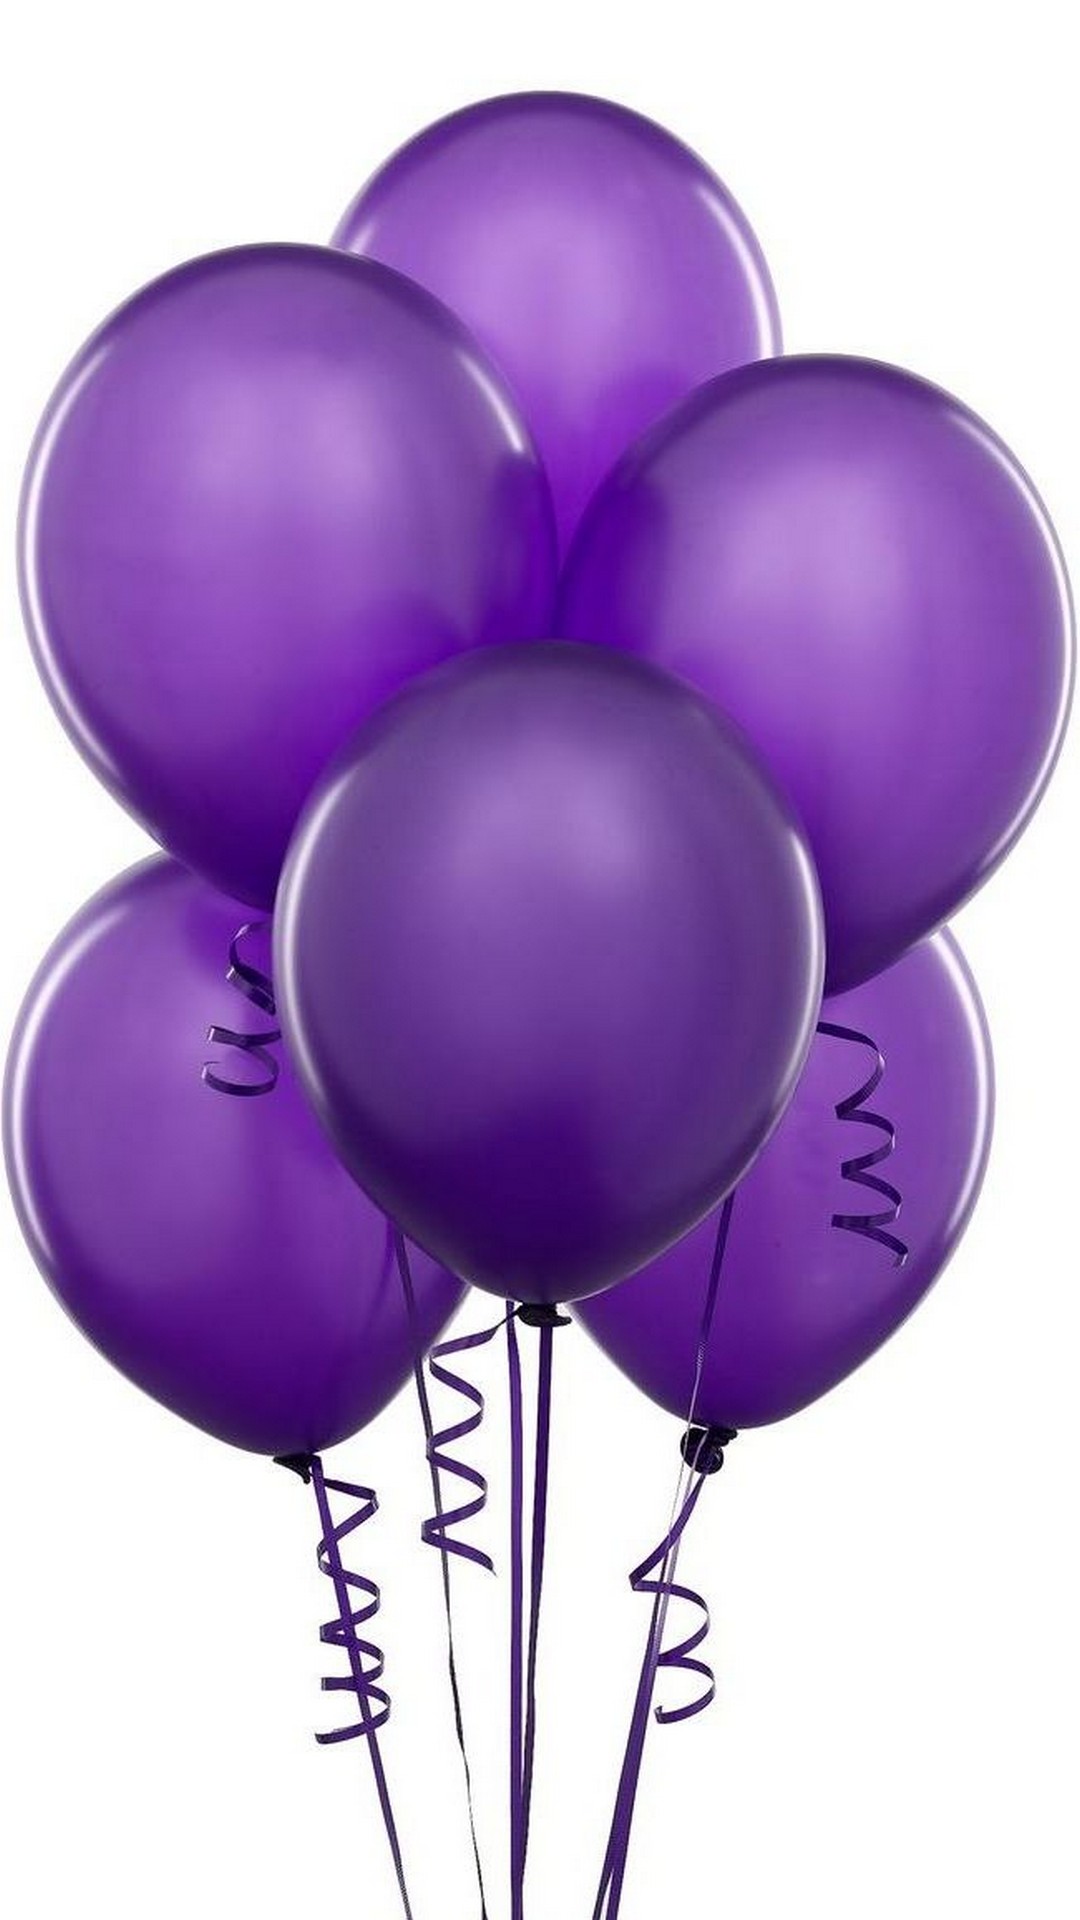 Purple Ballons iPhone Wallpaper resolution 1080x1920